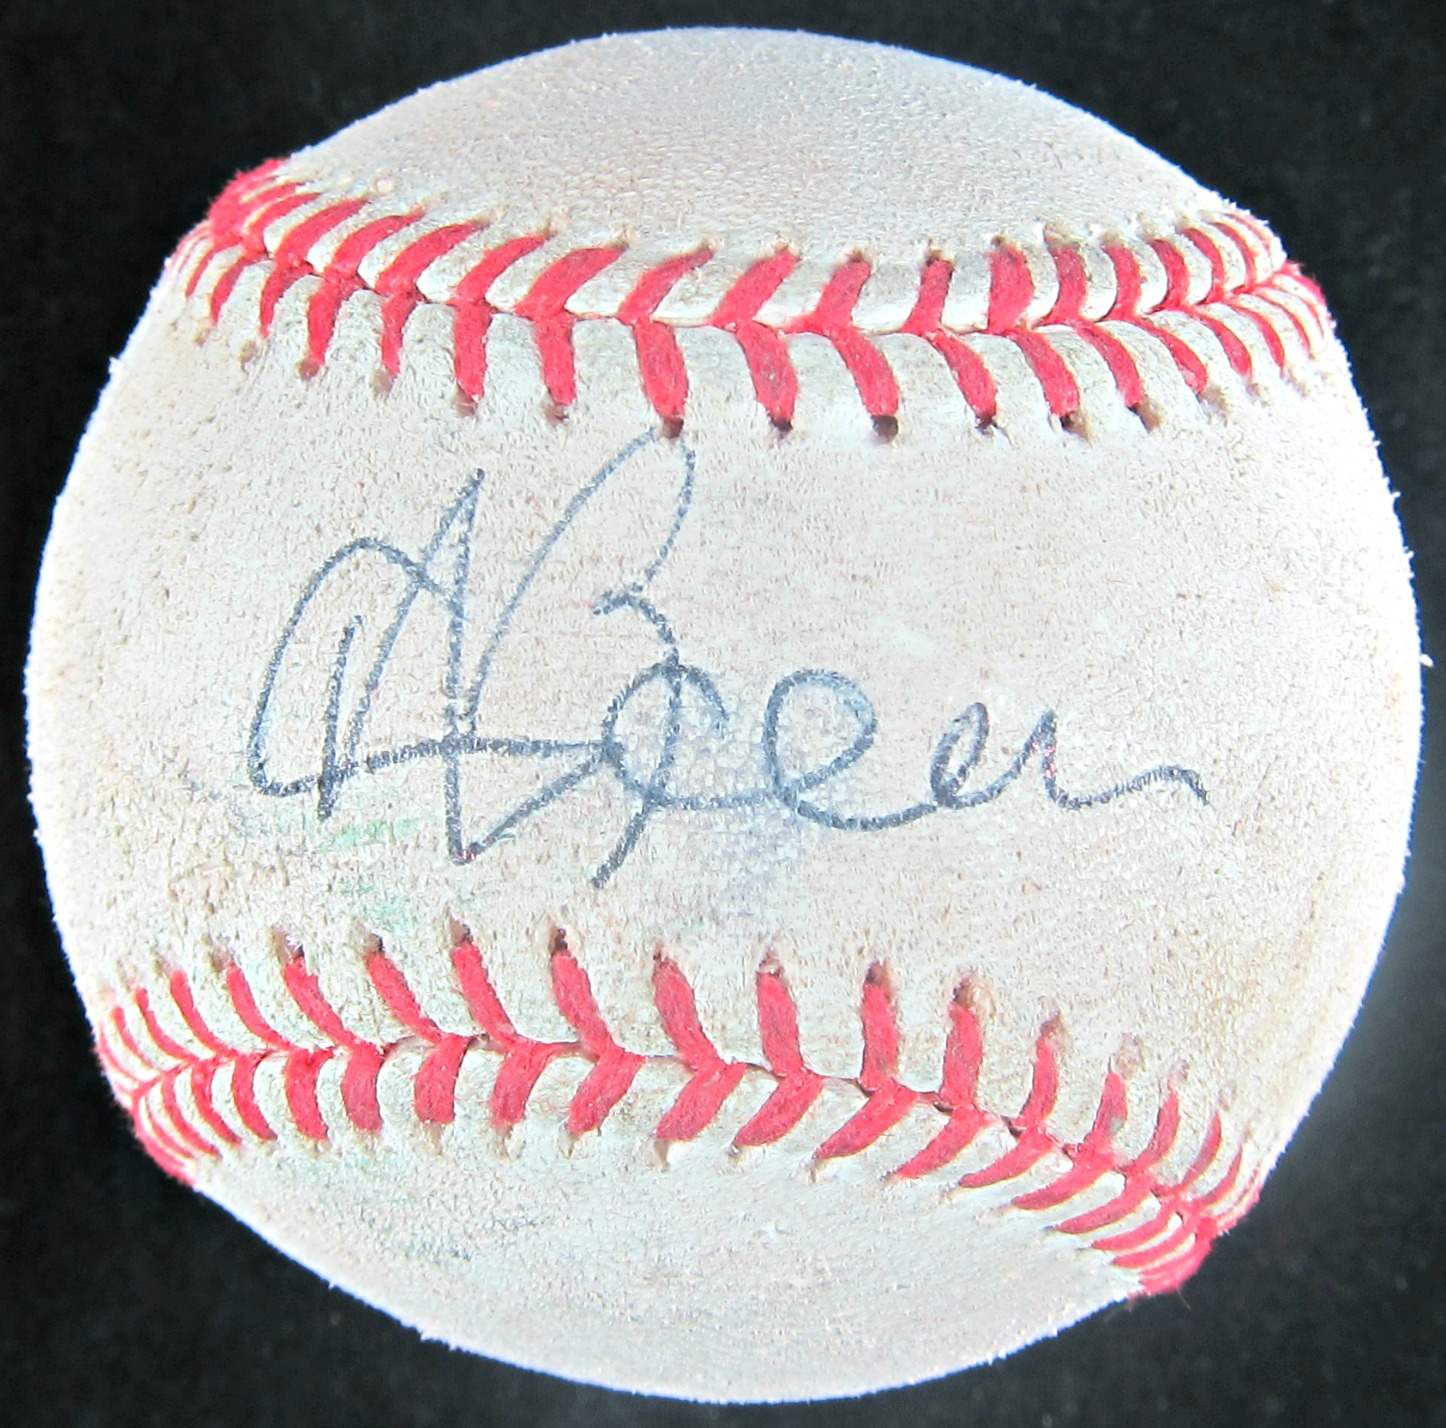 andrew benintendi autographed baseball